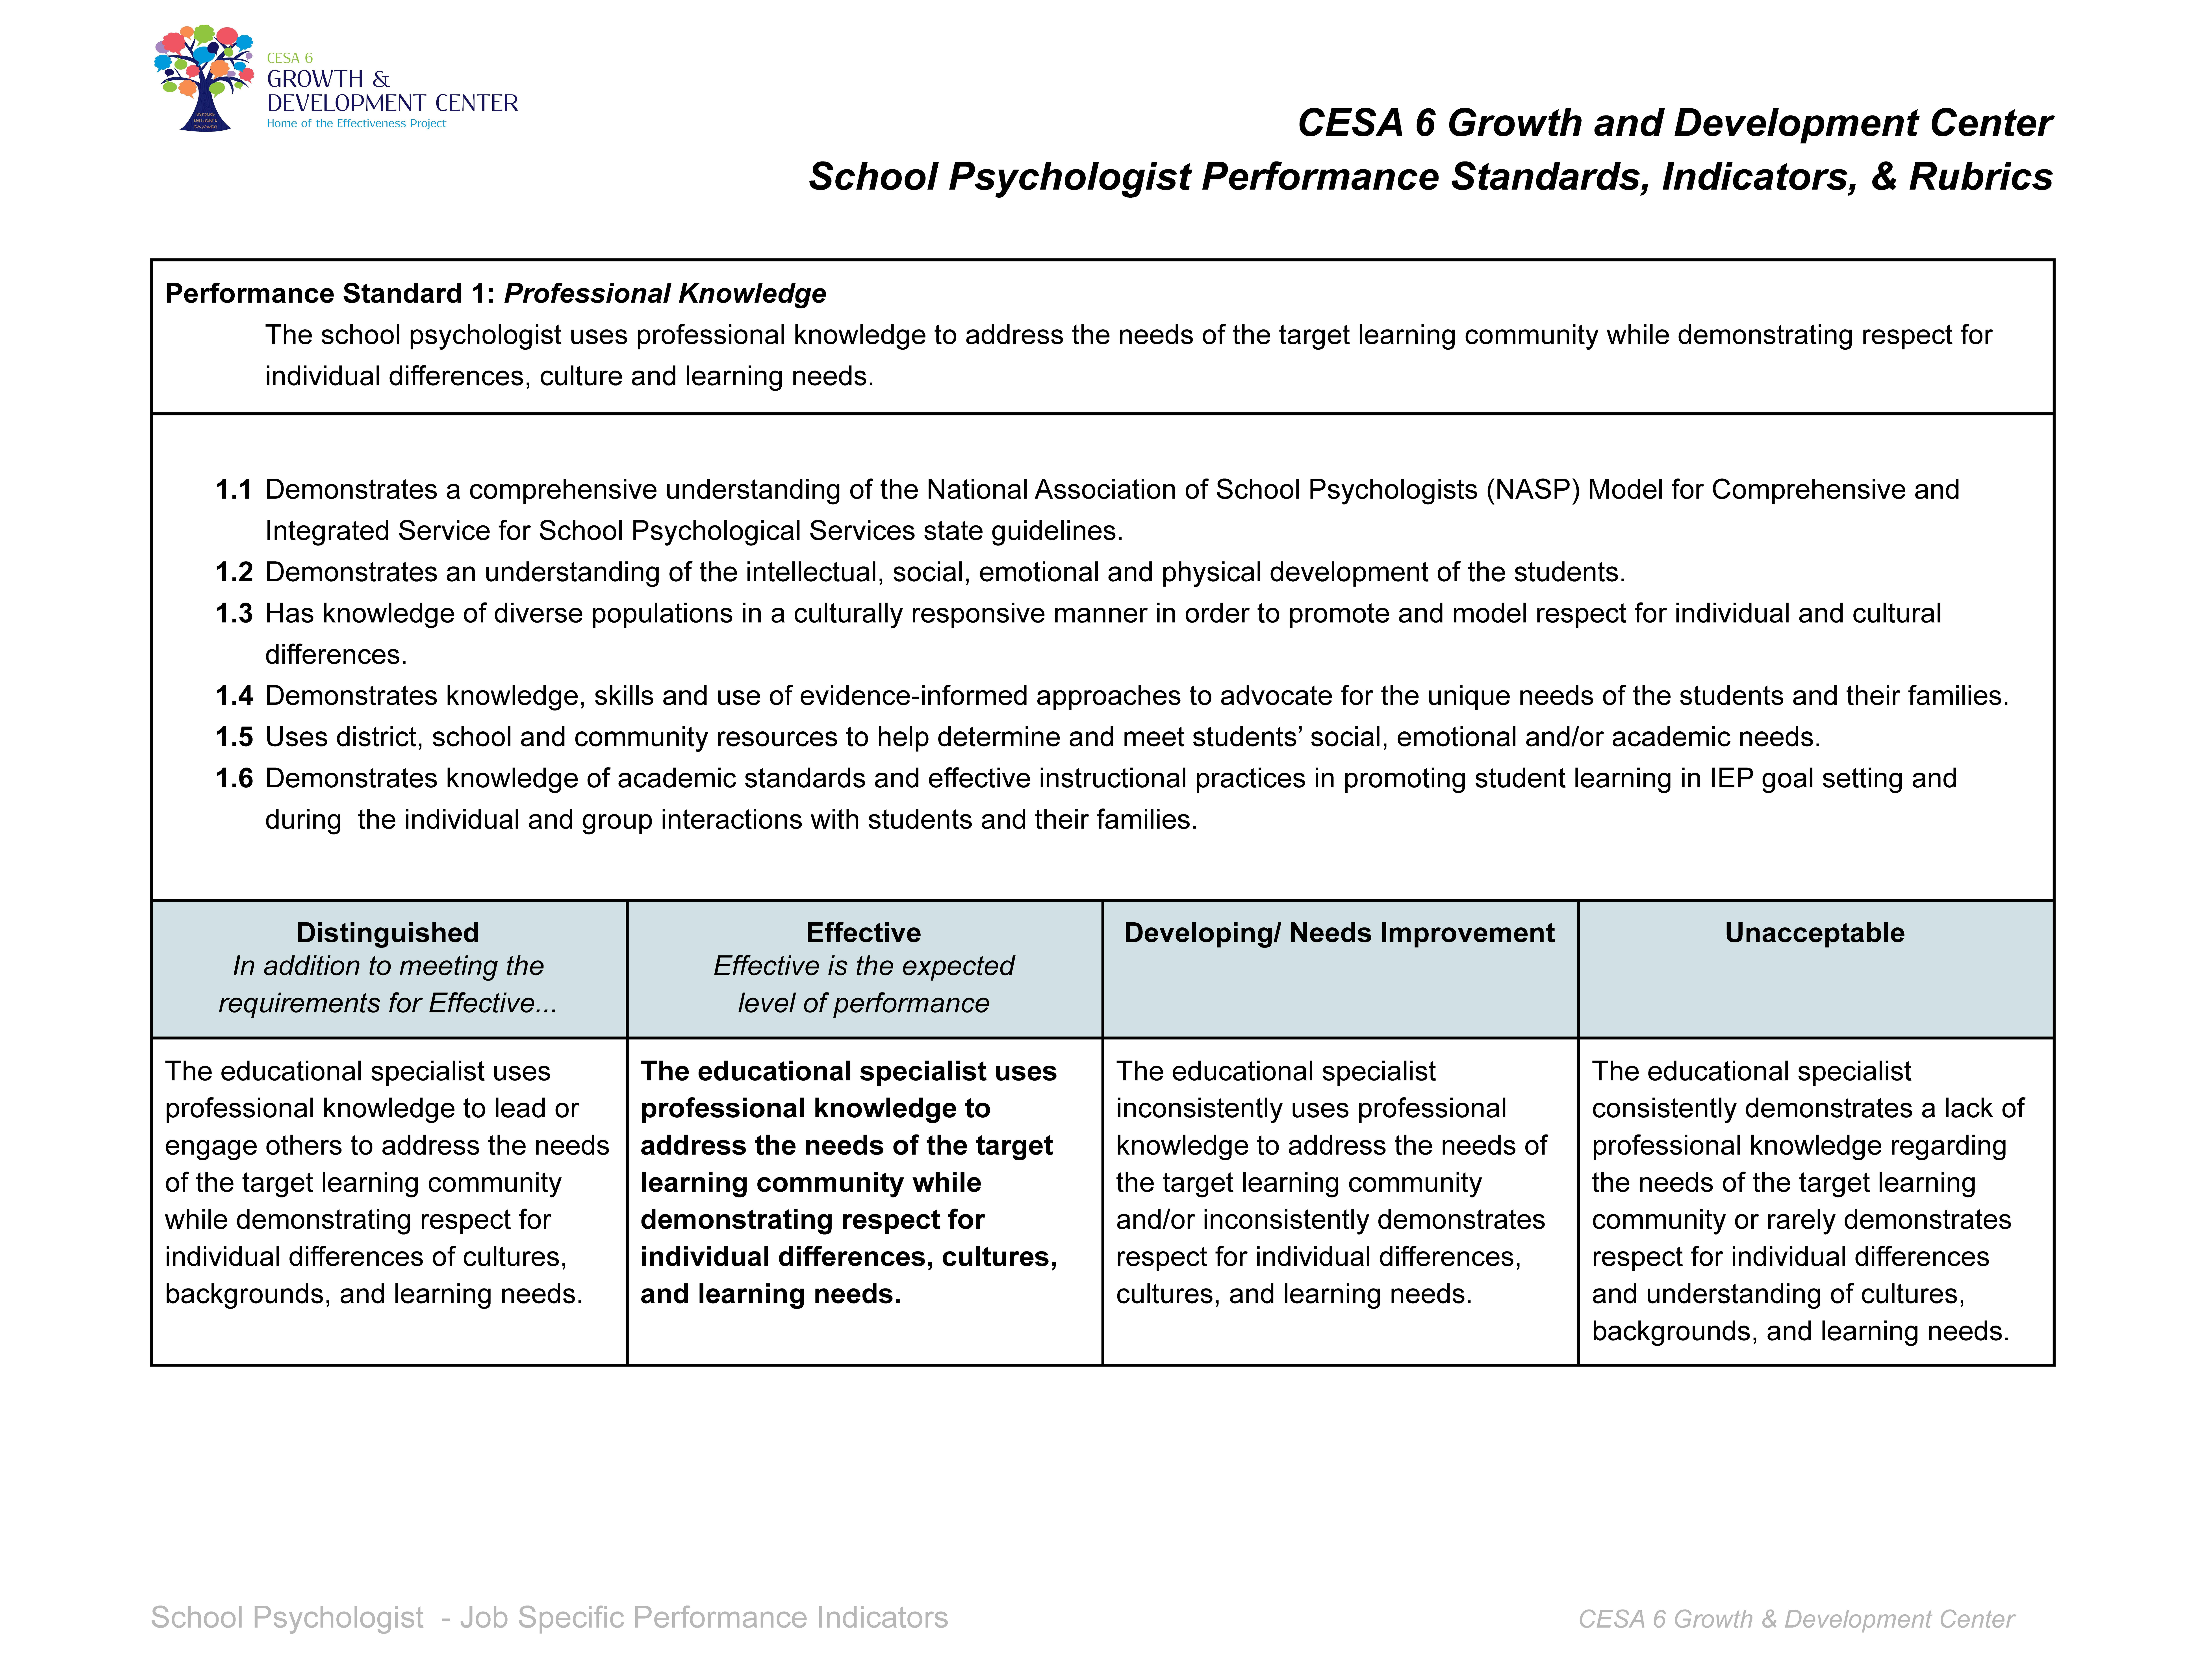 School Psychologist Performance Indicators_Standards_Rubrics 5.2019.jpg